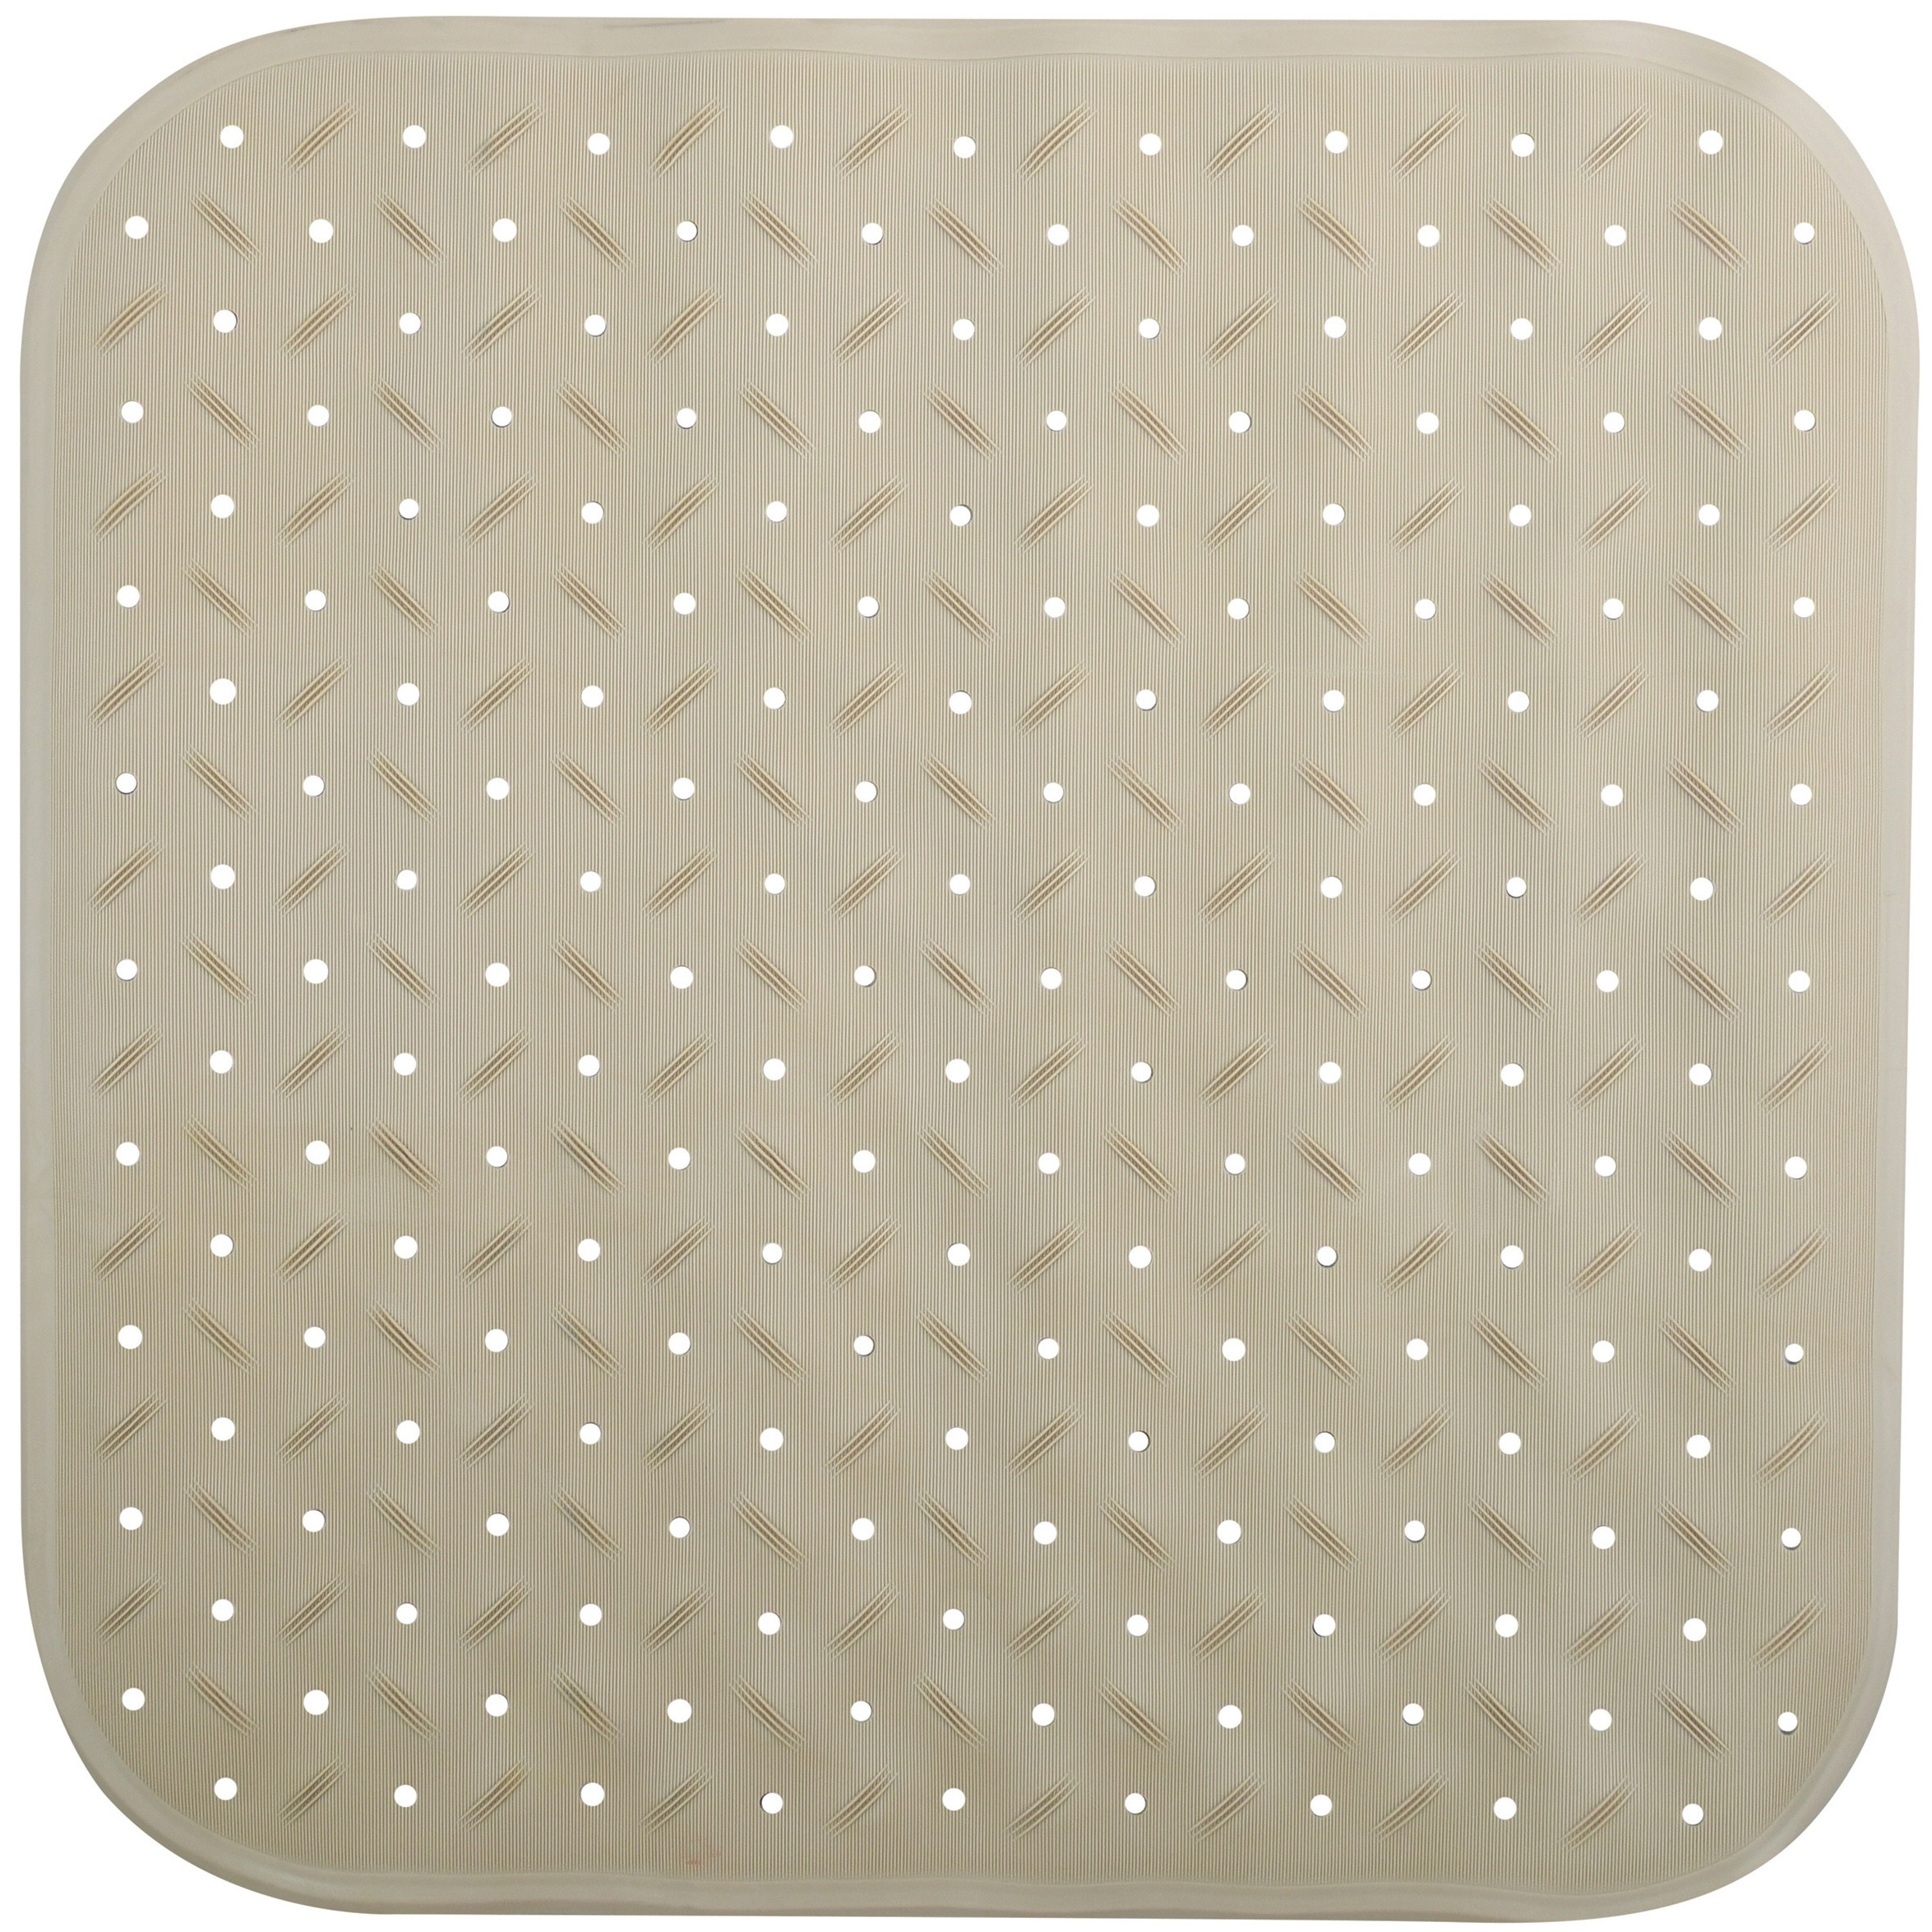 Douche-bad anti-slip mat badkamer rubber beige 54 x 54 cm vierkant